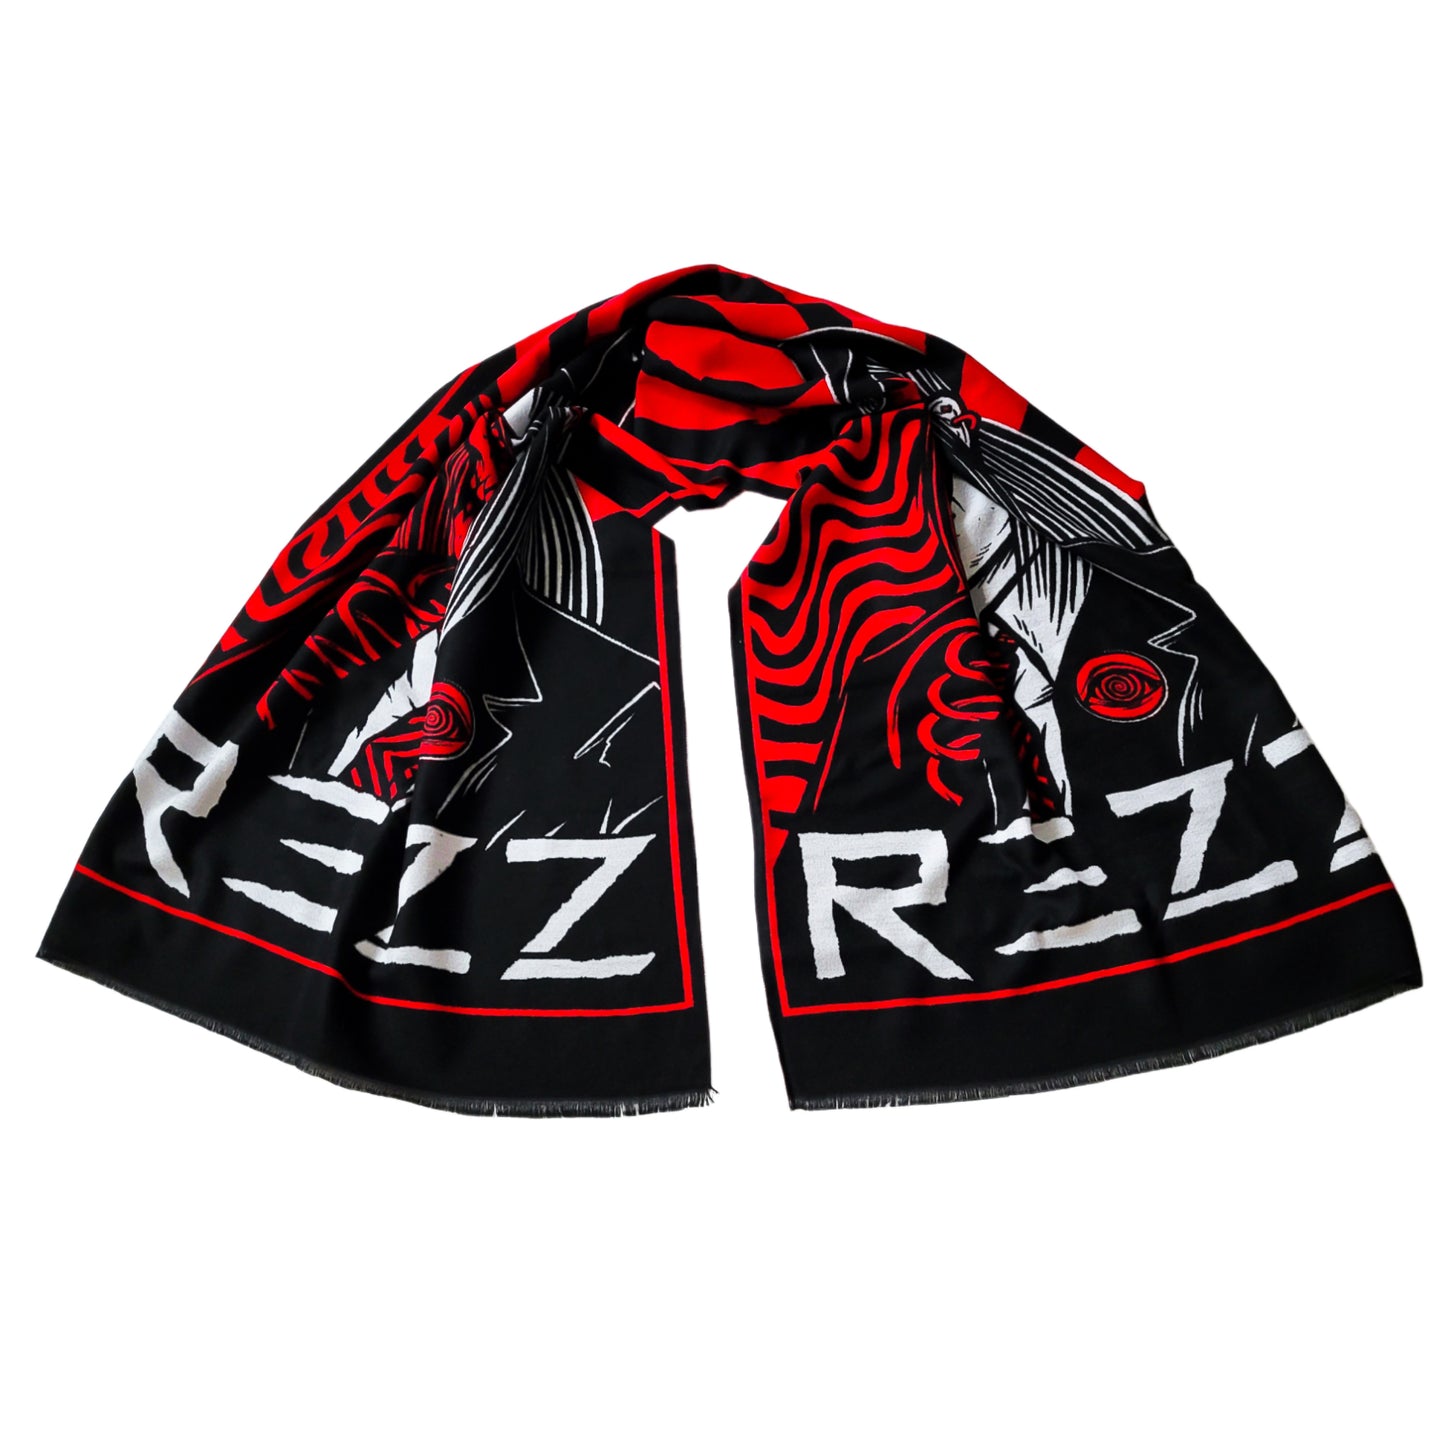 REZZ - Death Stare Knit Pashmina - Red / Black